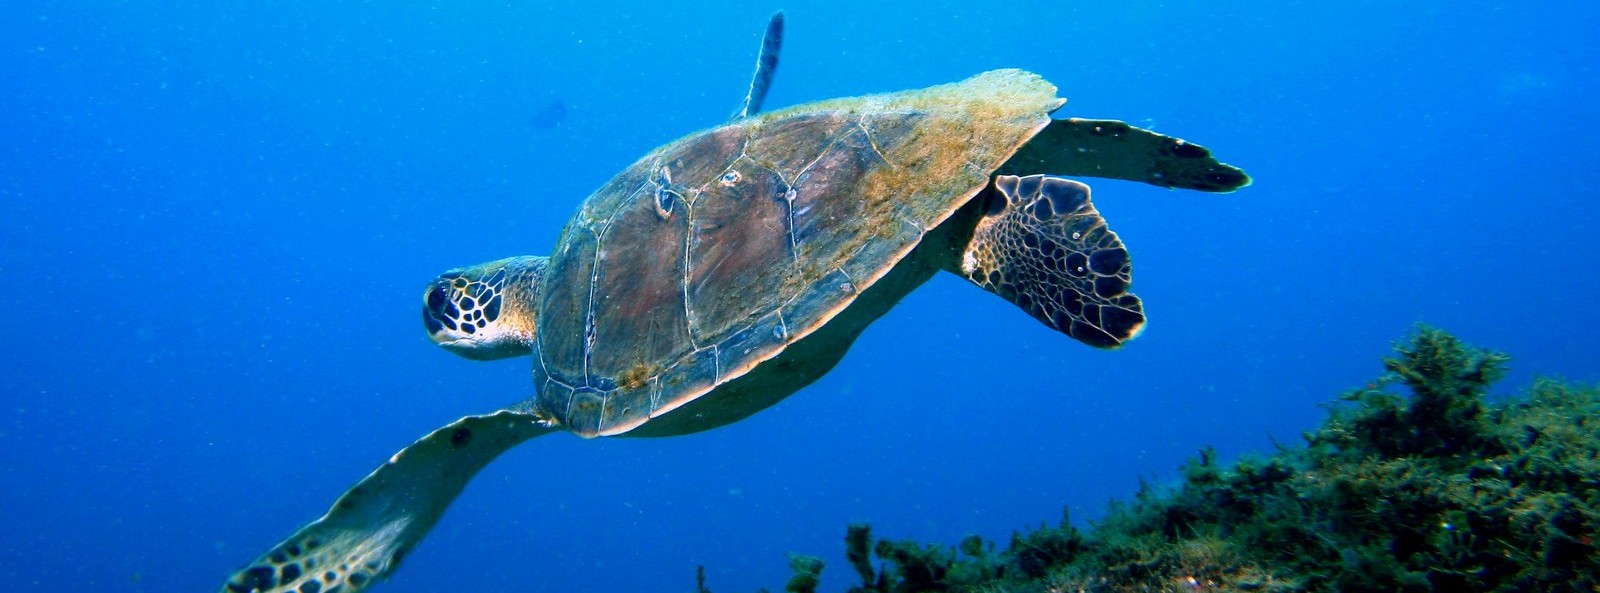 Mergulho na Ilha do Arvoredo com tartarugas!